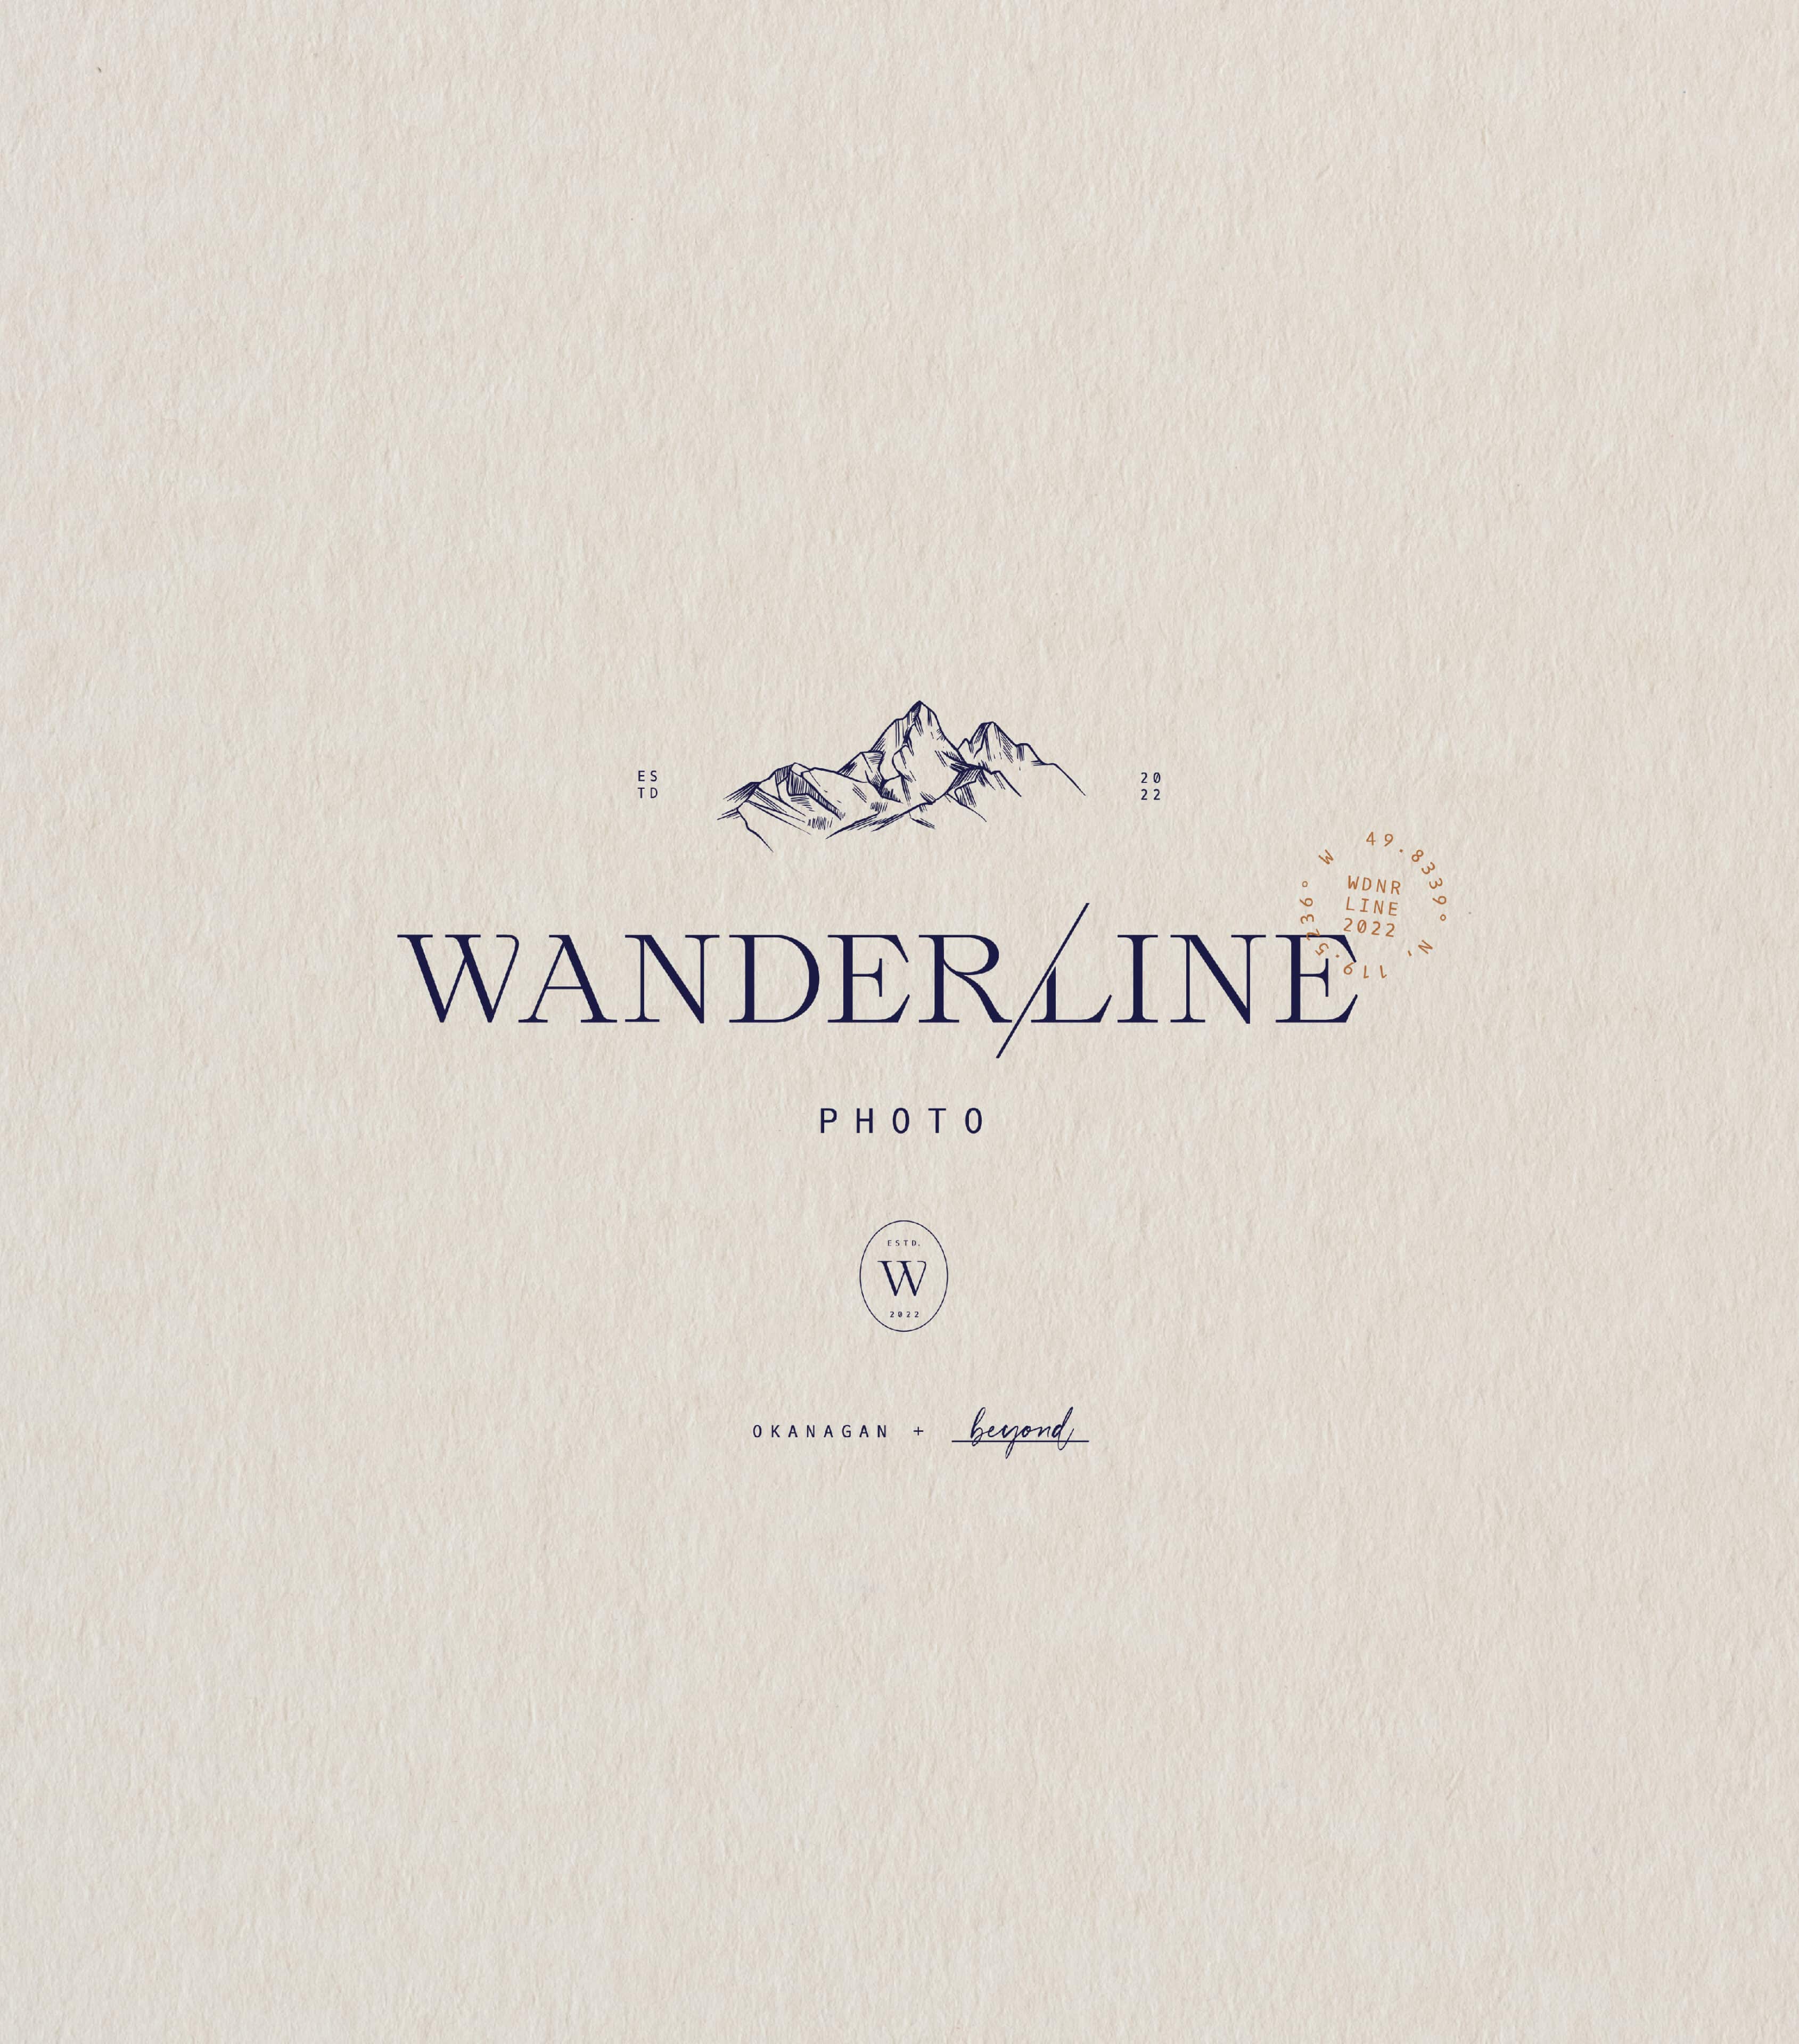 Wanderline Photo primary logo mockup